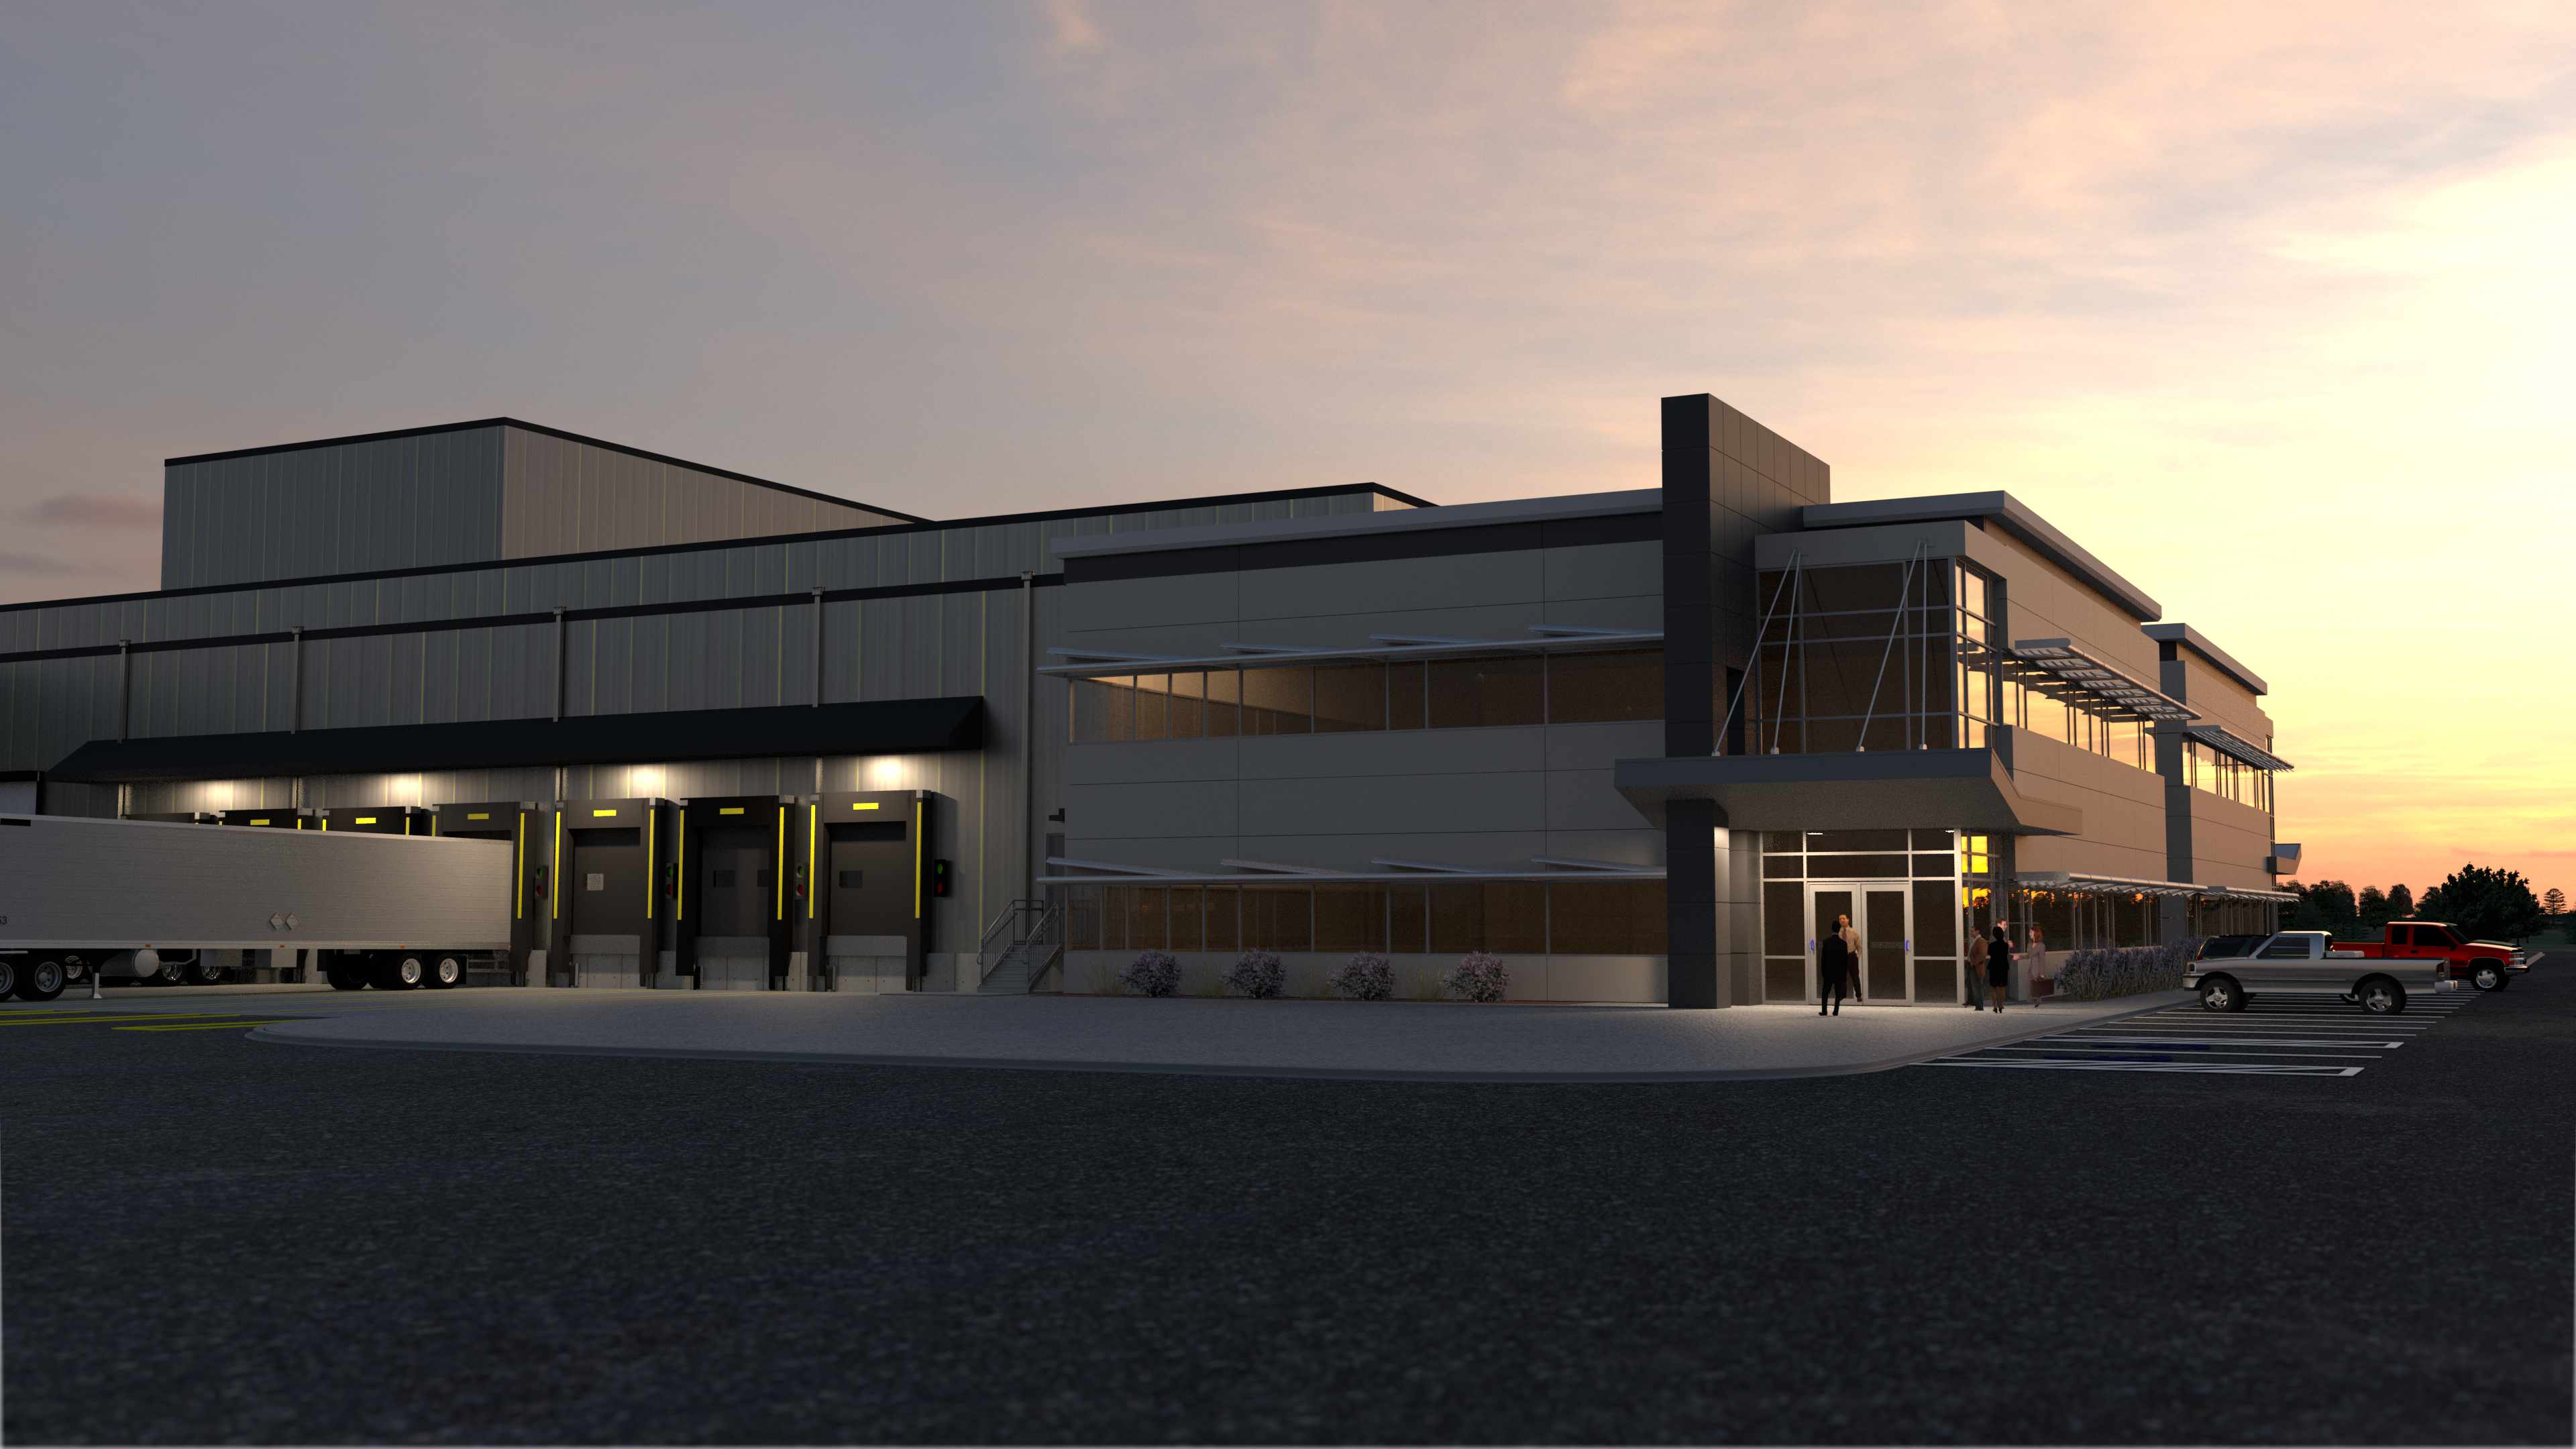 3d model rendering of warehouse evening